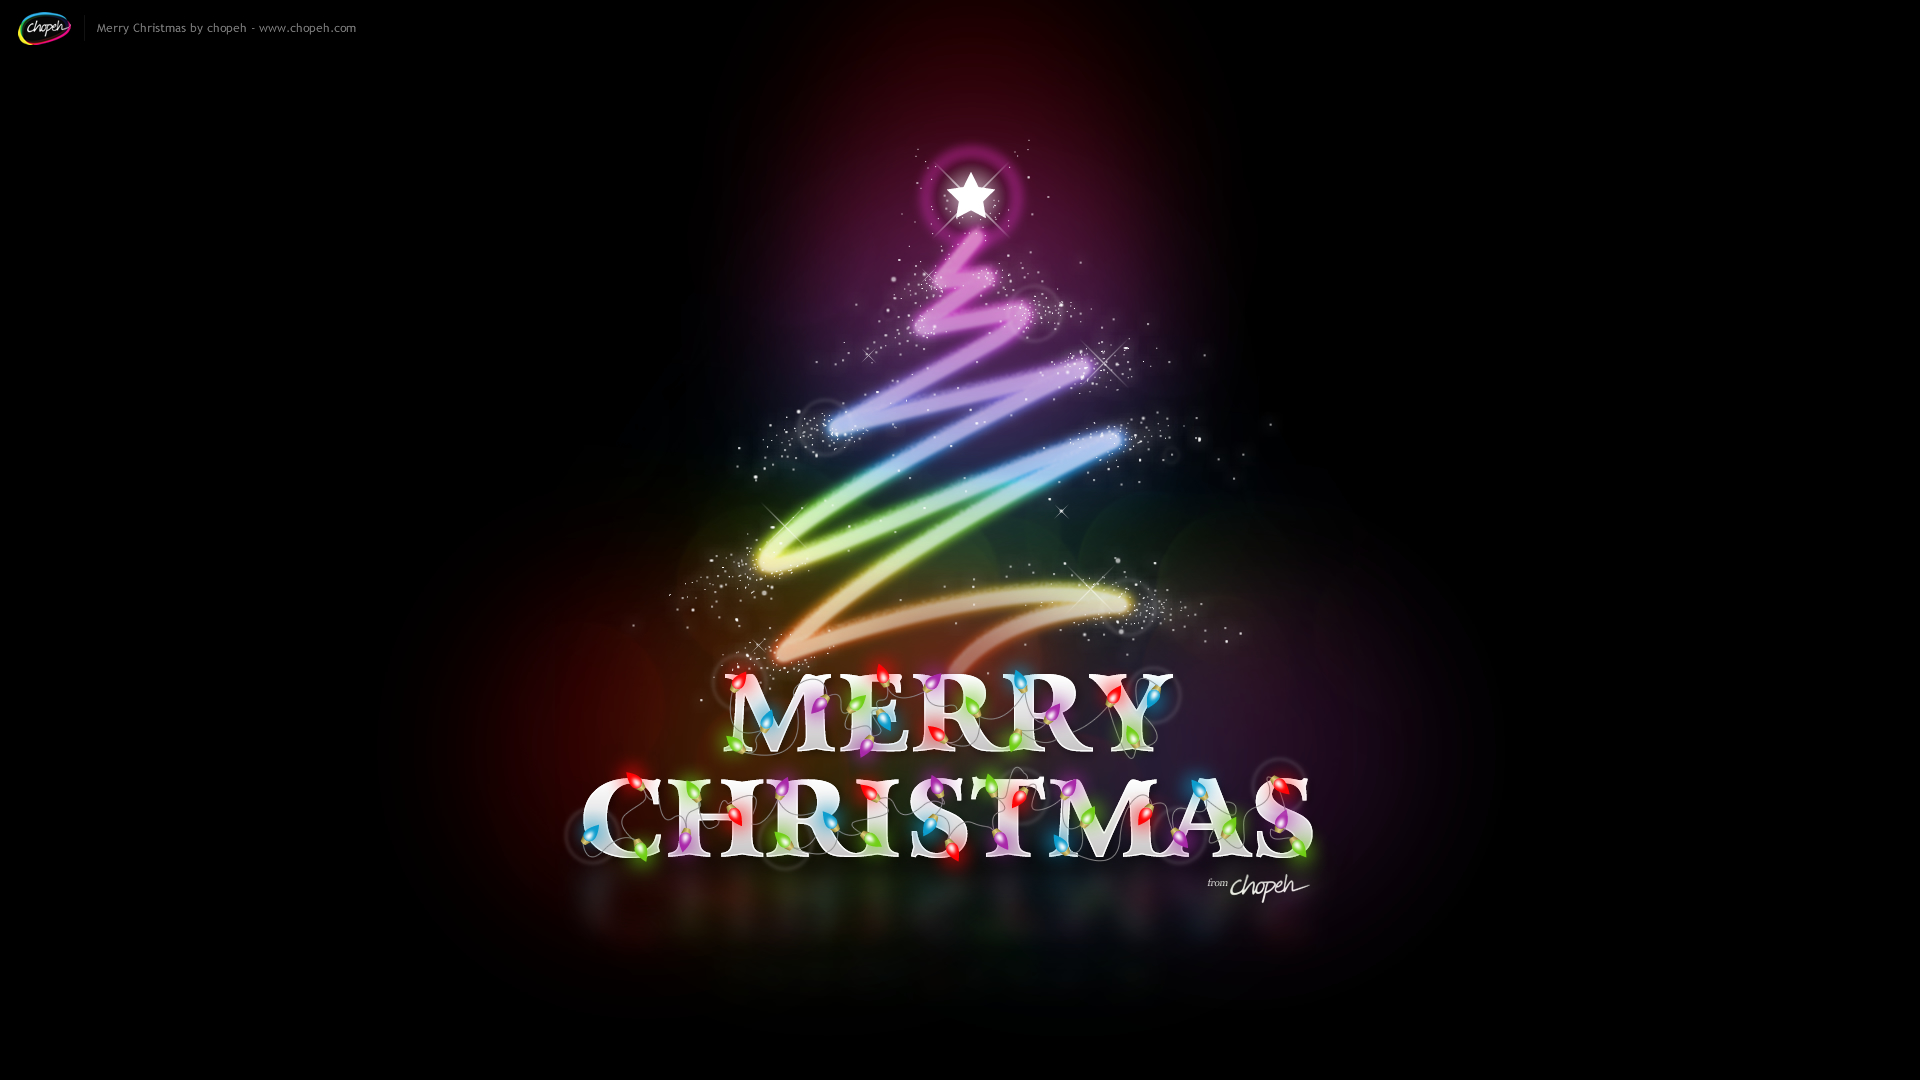 [Image: Merry_Christmas_by_chopeh.jpg]